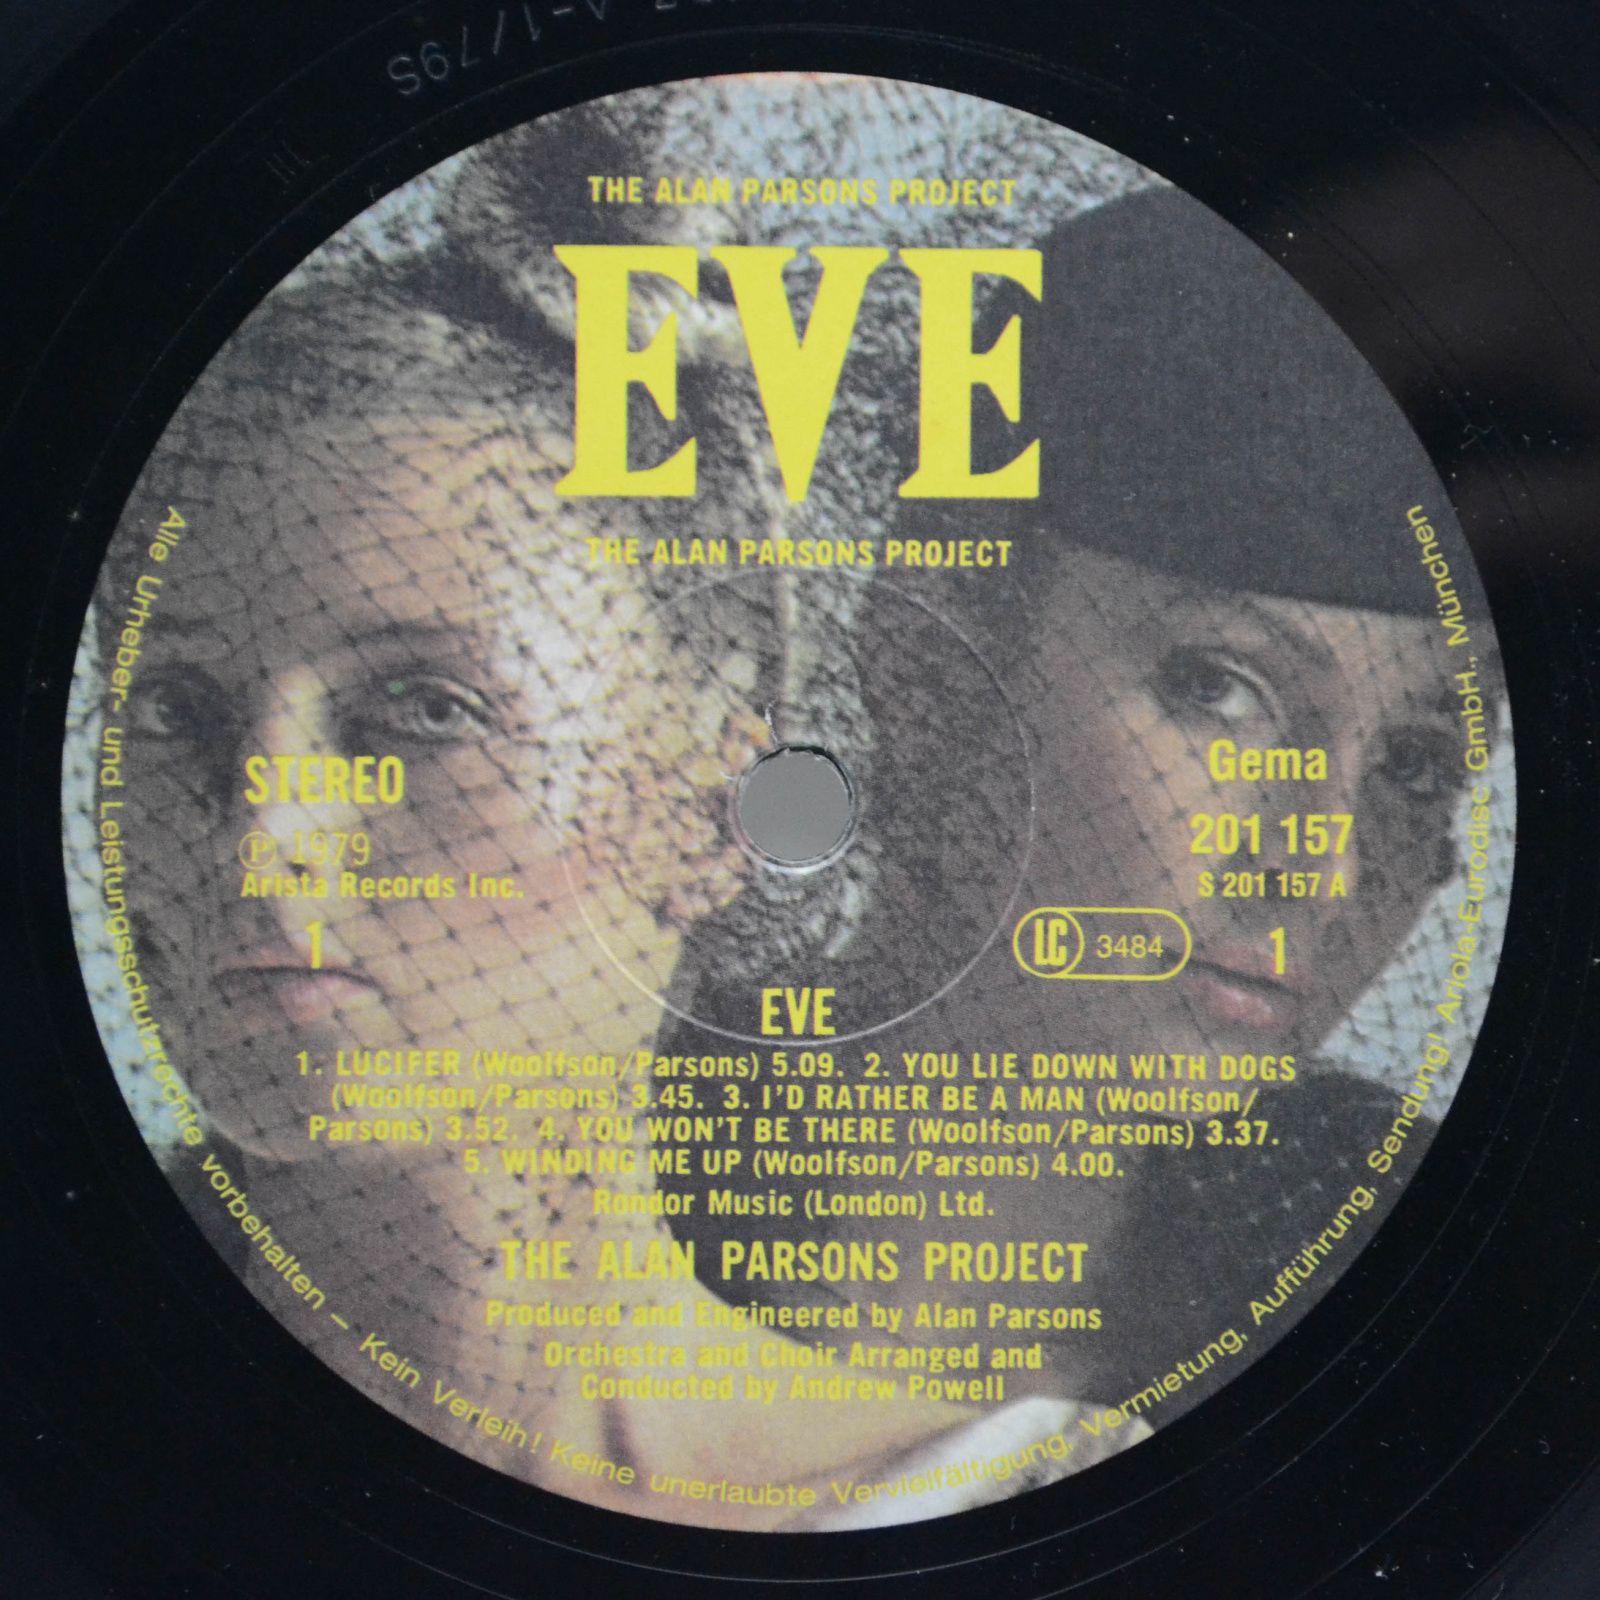 Alan Parsons Project — Eve, 1979